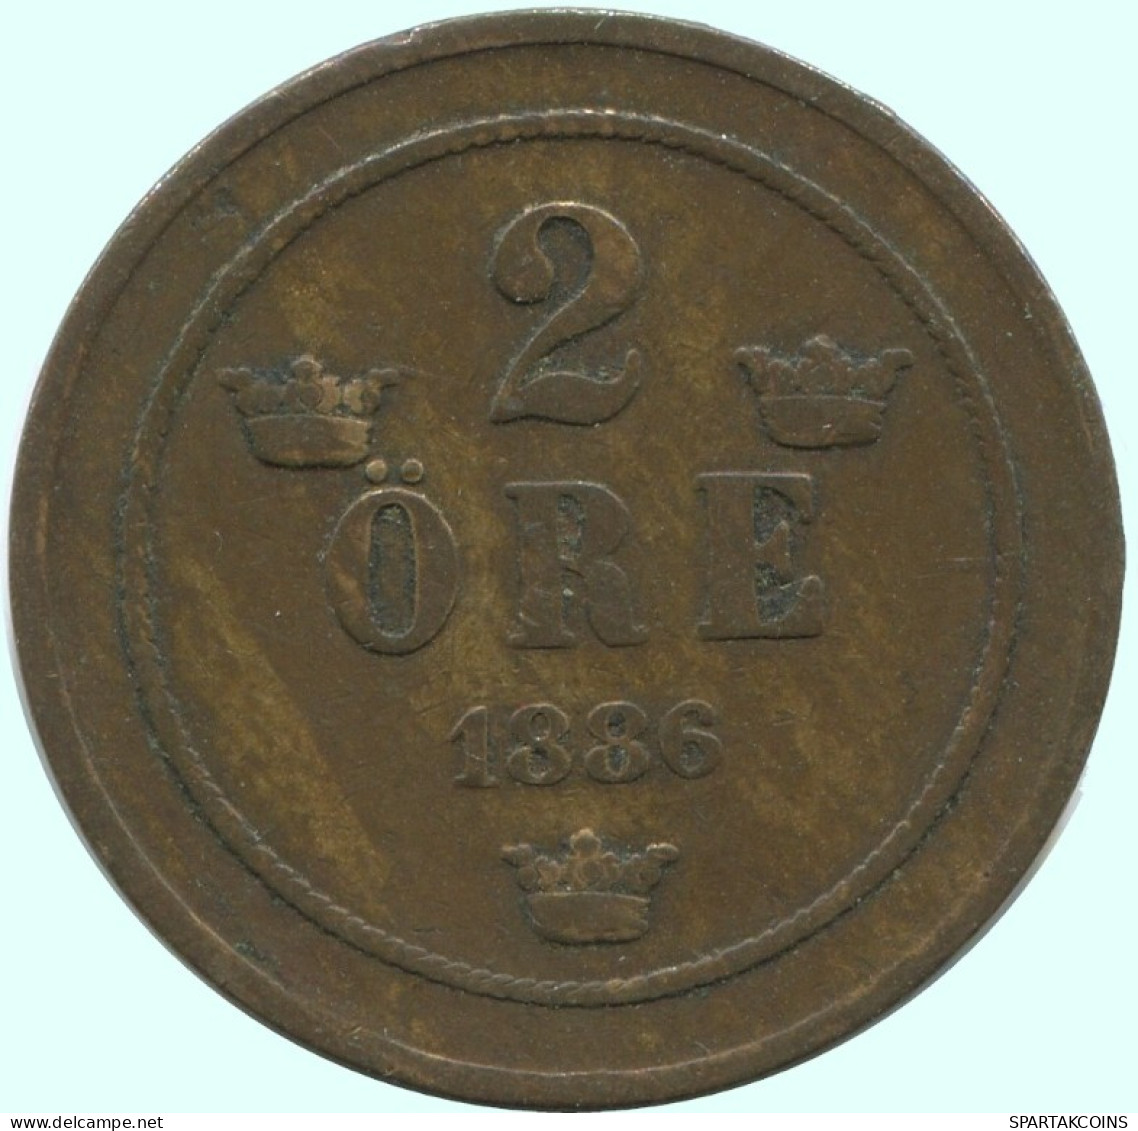 2 ORE 1886 SWEDEN Coin #AC923.2.U.A - Sweden